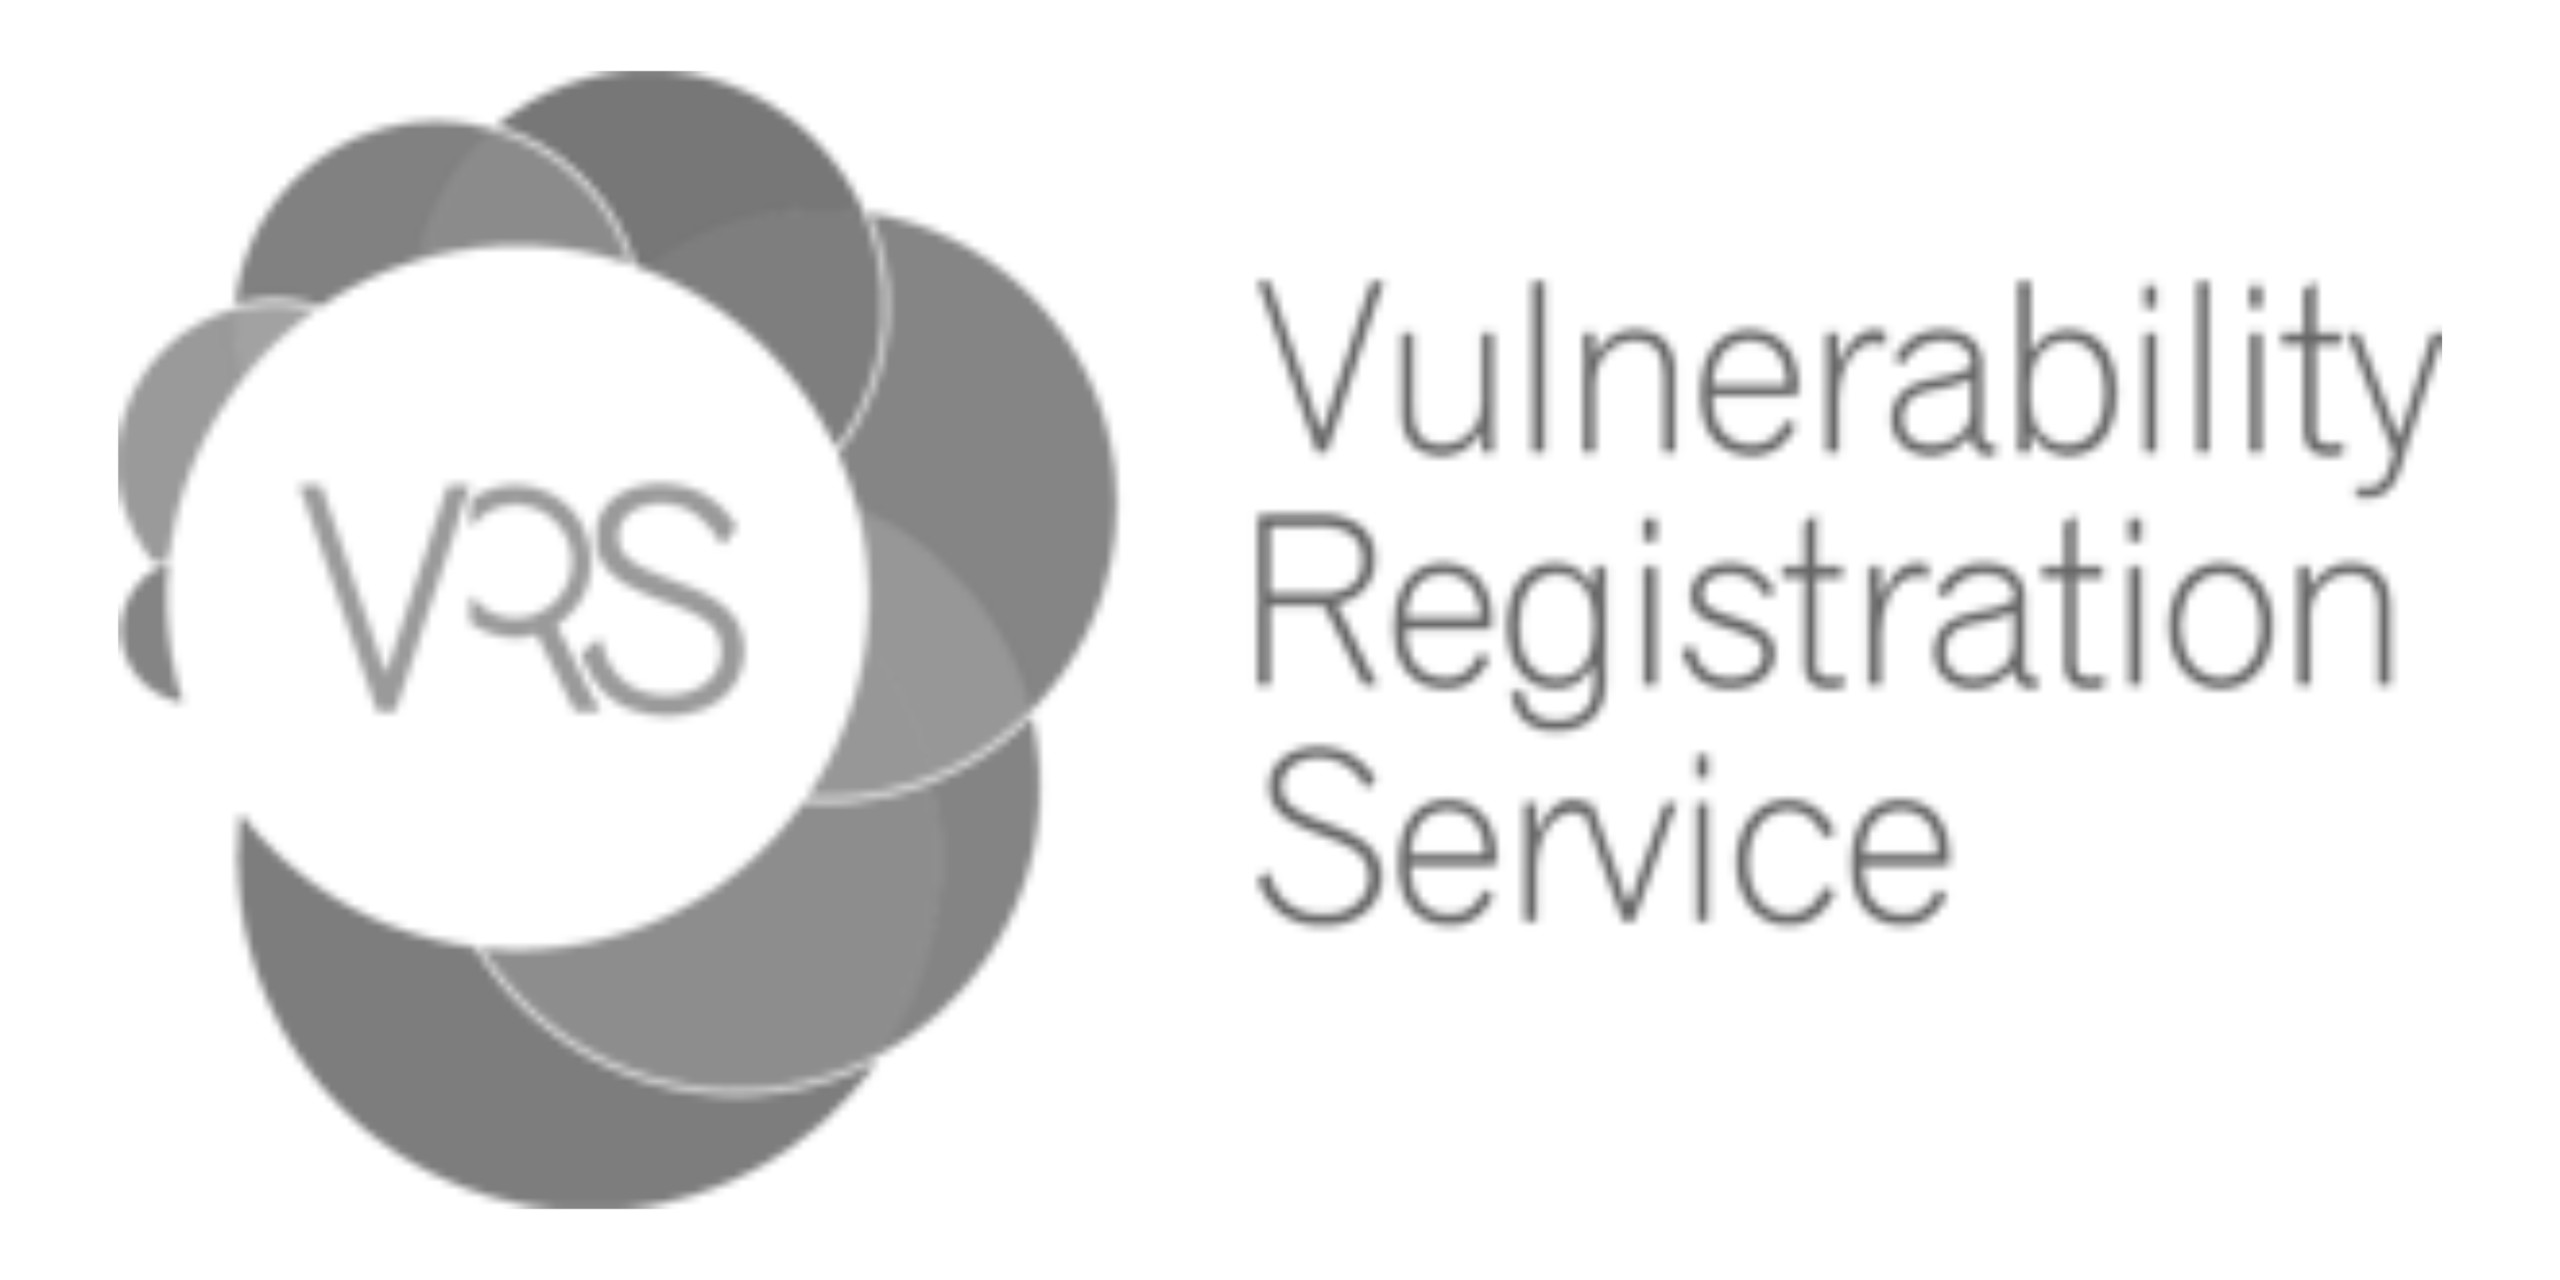 Vulnerability Registration Service